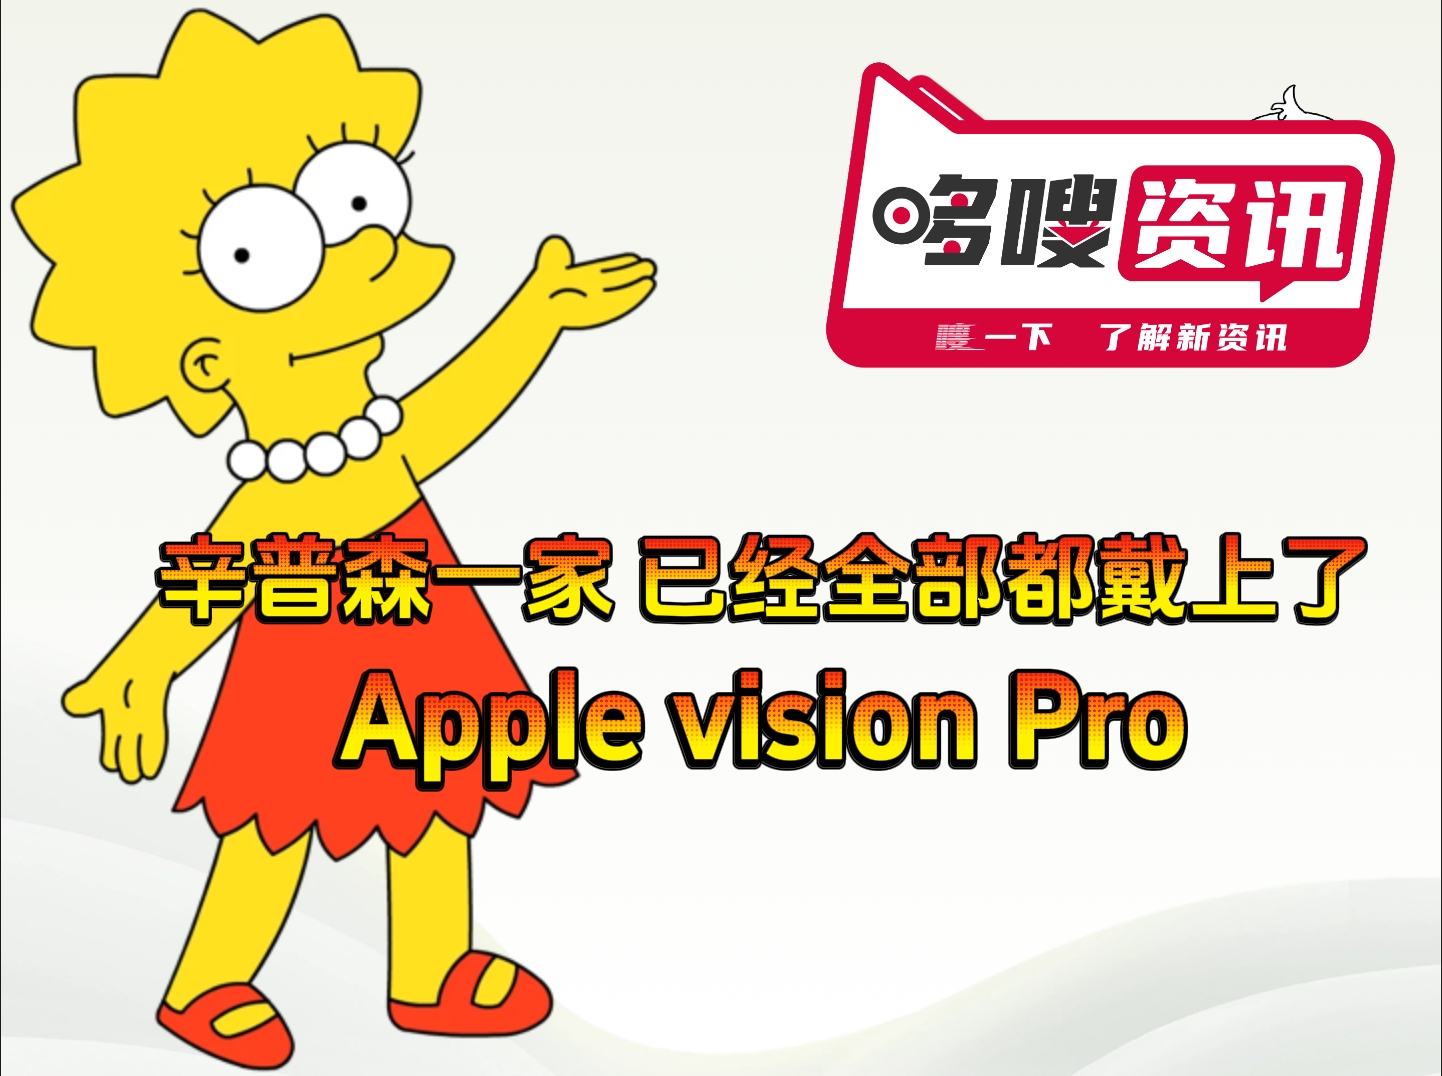 辛普森一家 已经全部都戴上了Apple vision Pro1.png